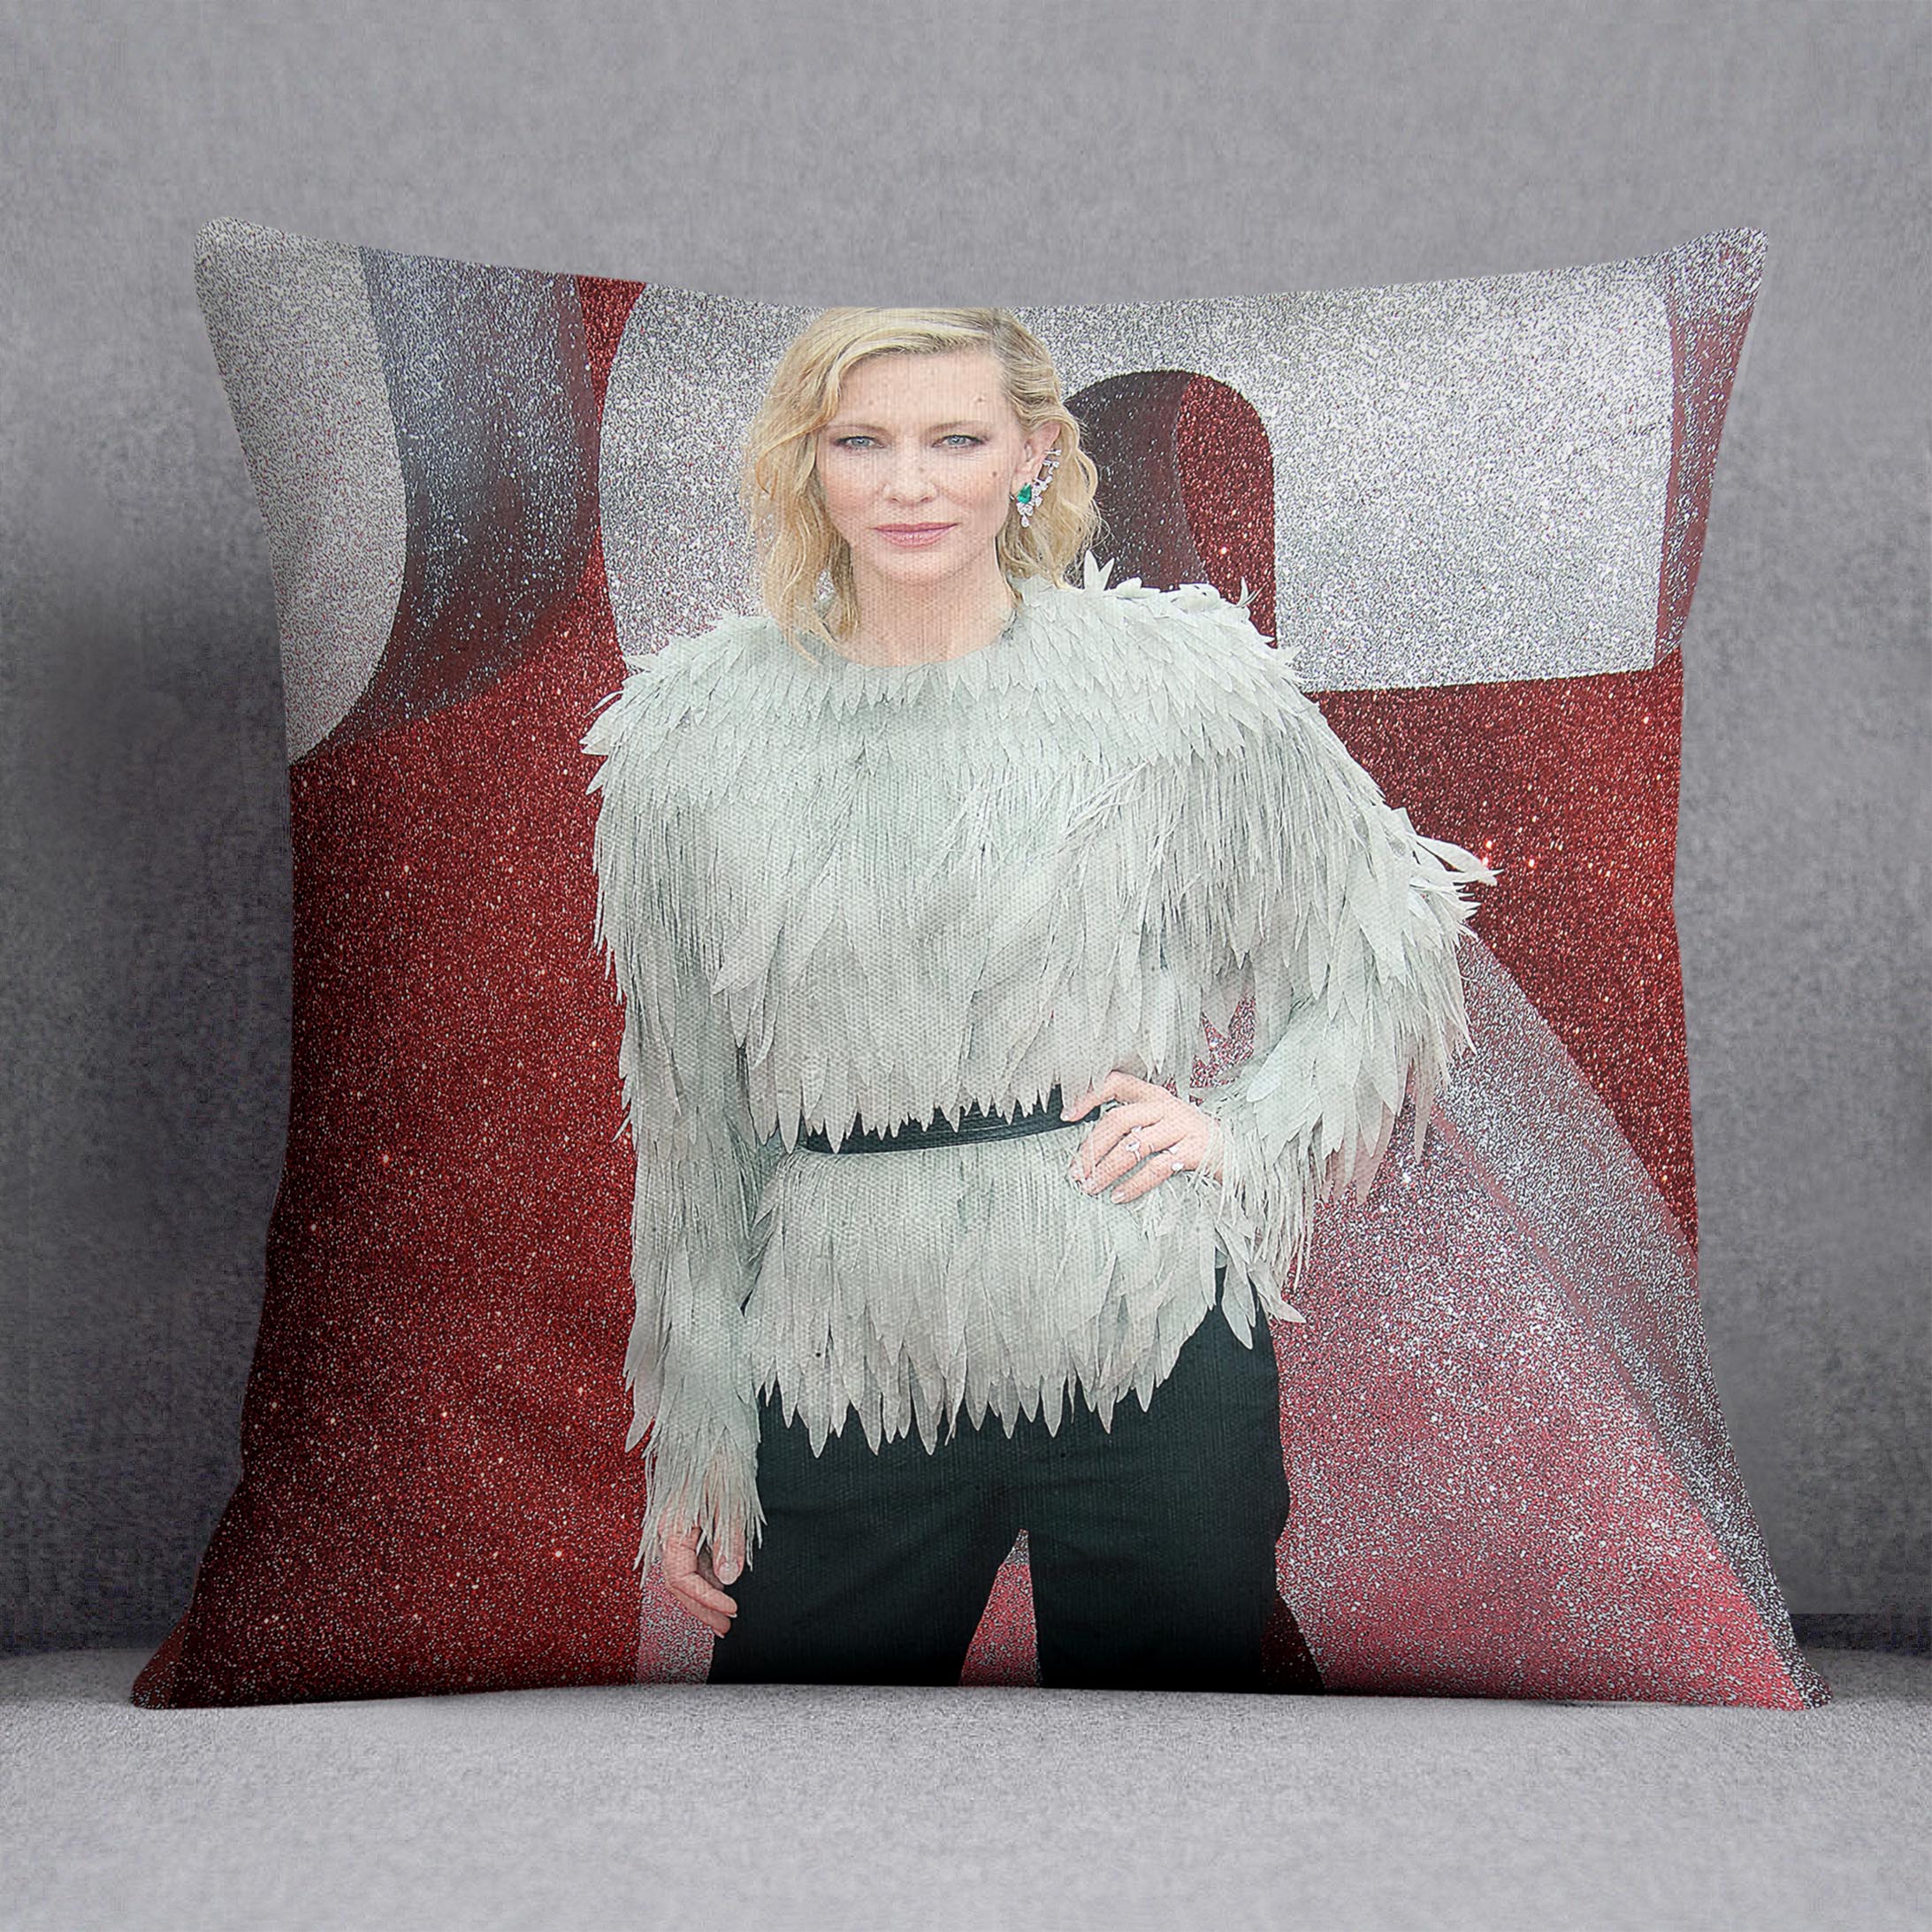 Cate Blanchett Cushion